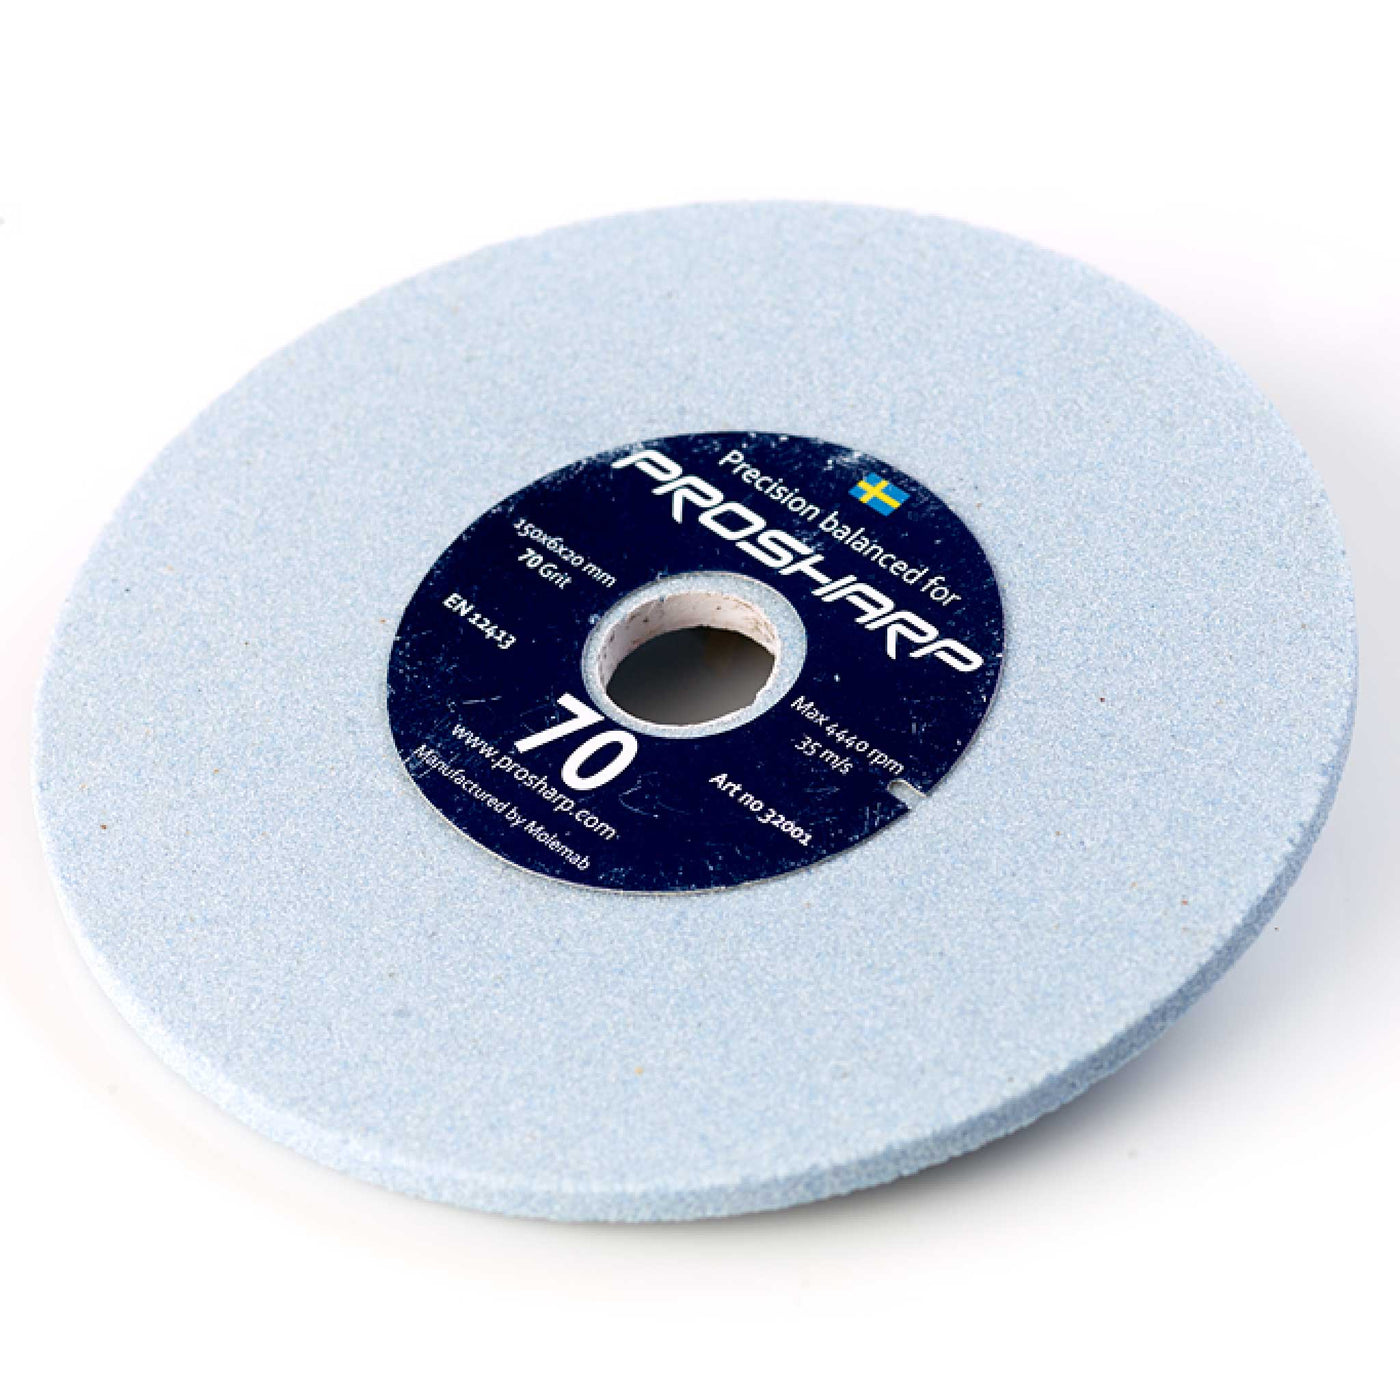 Prosharp MA70 grinding disc